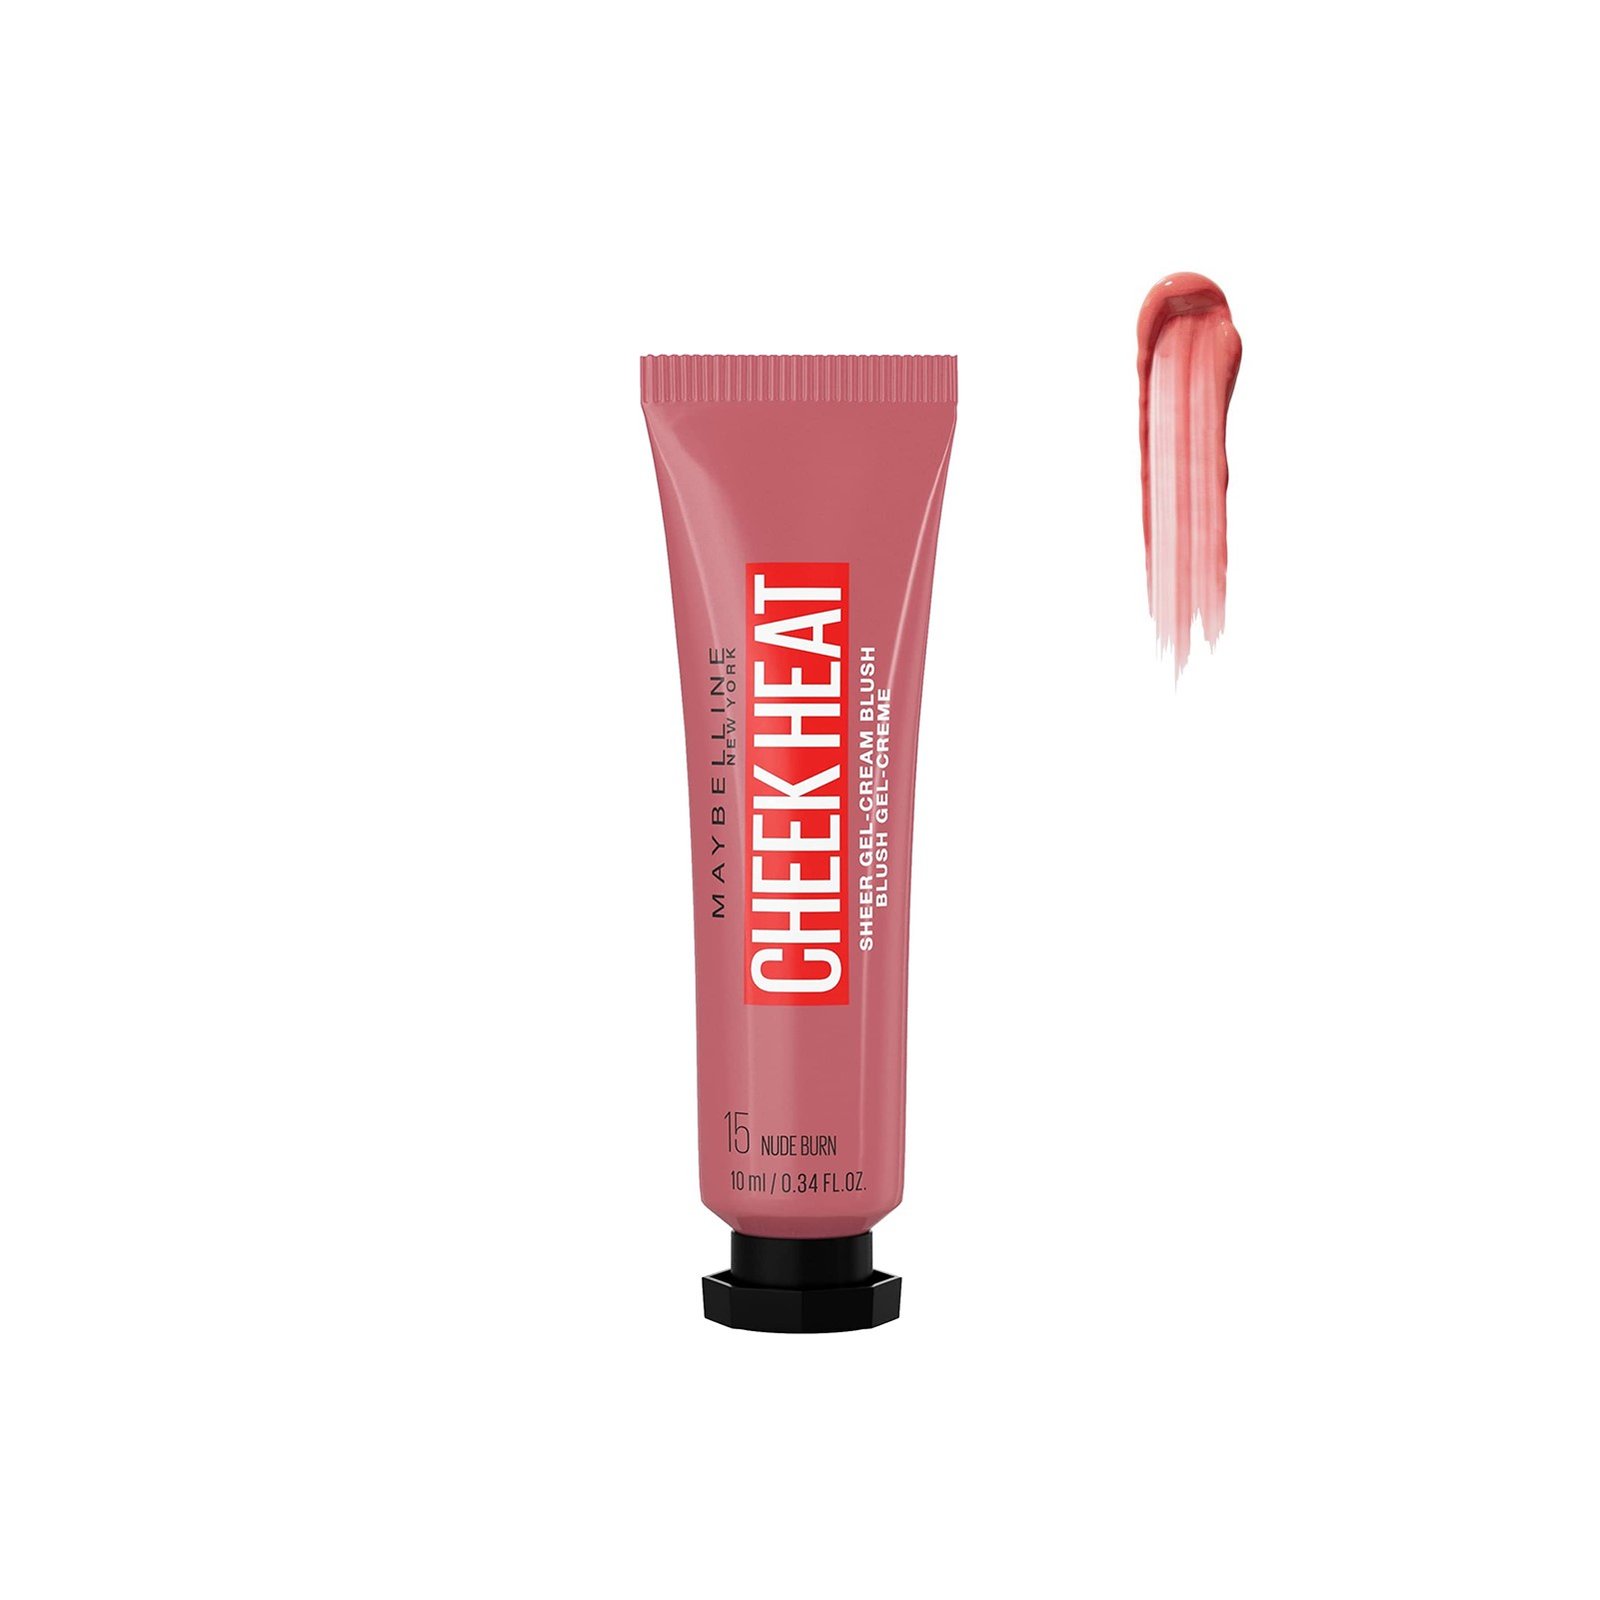 Maybelline Cheek Heat Sheer Gel-Cream Blush 15 Nude Burn 10ml